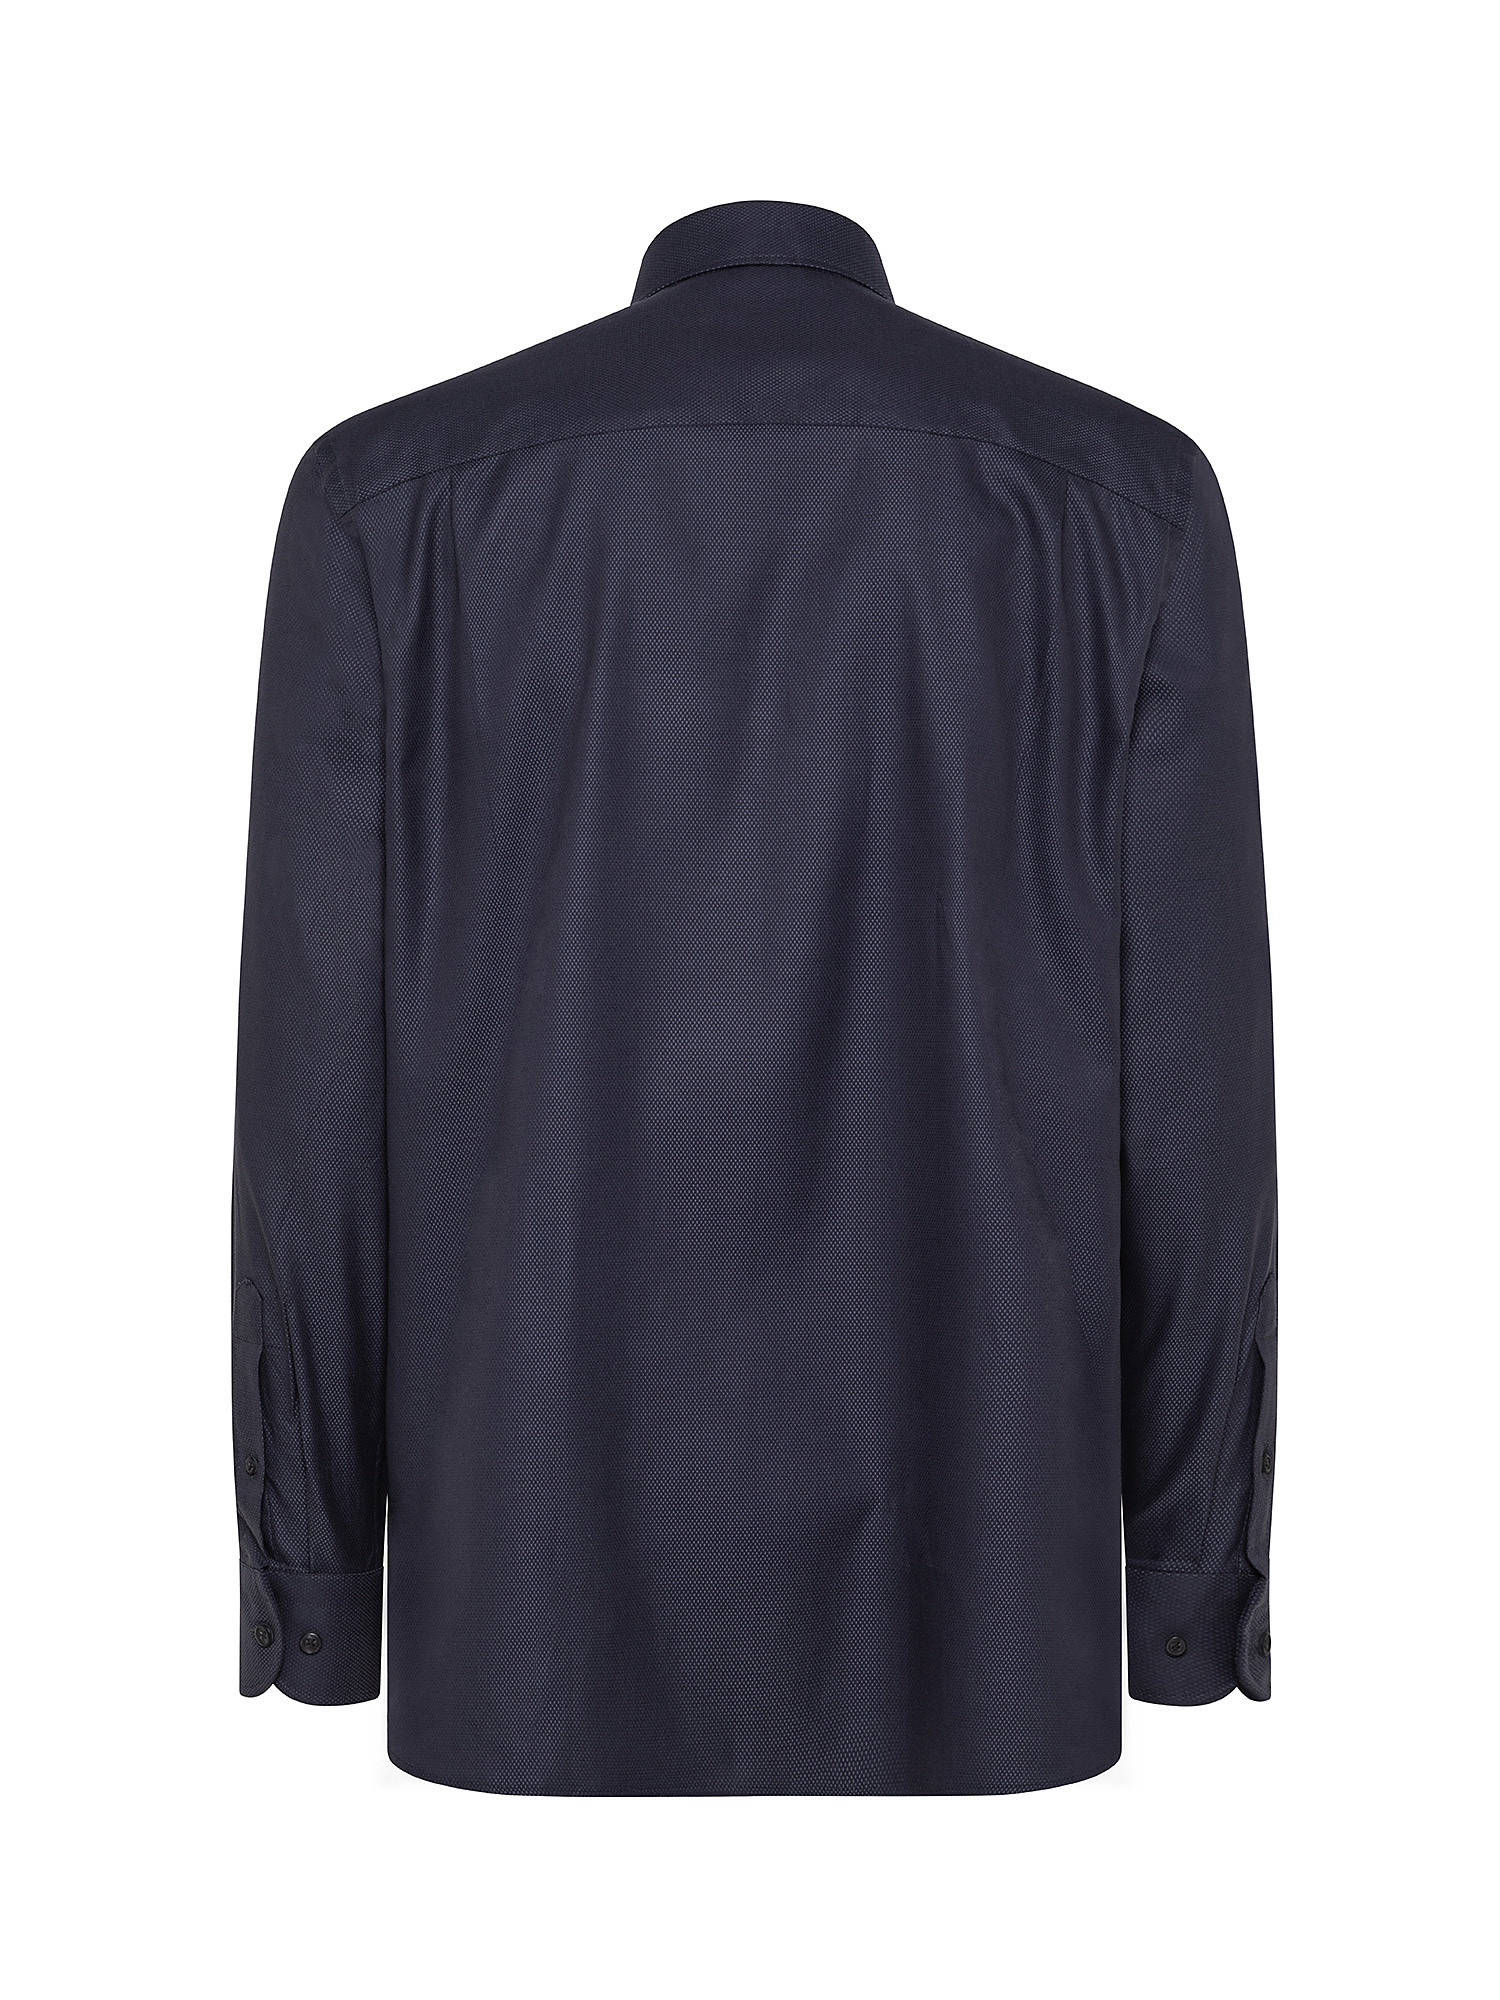 Camicia regular fit cotone armaturato, Blu, large image number 1